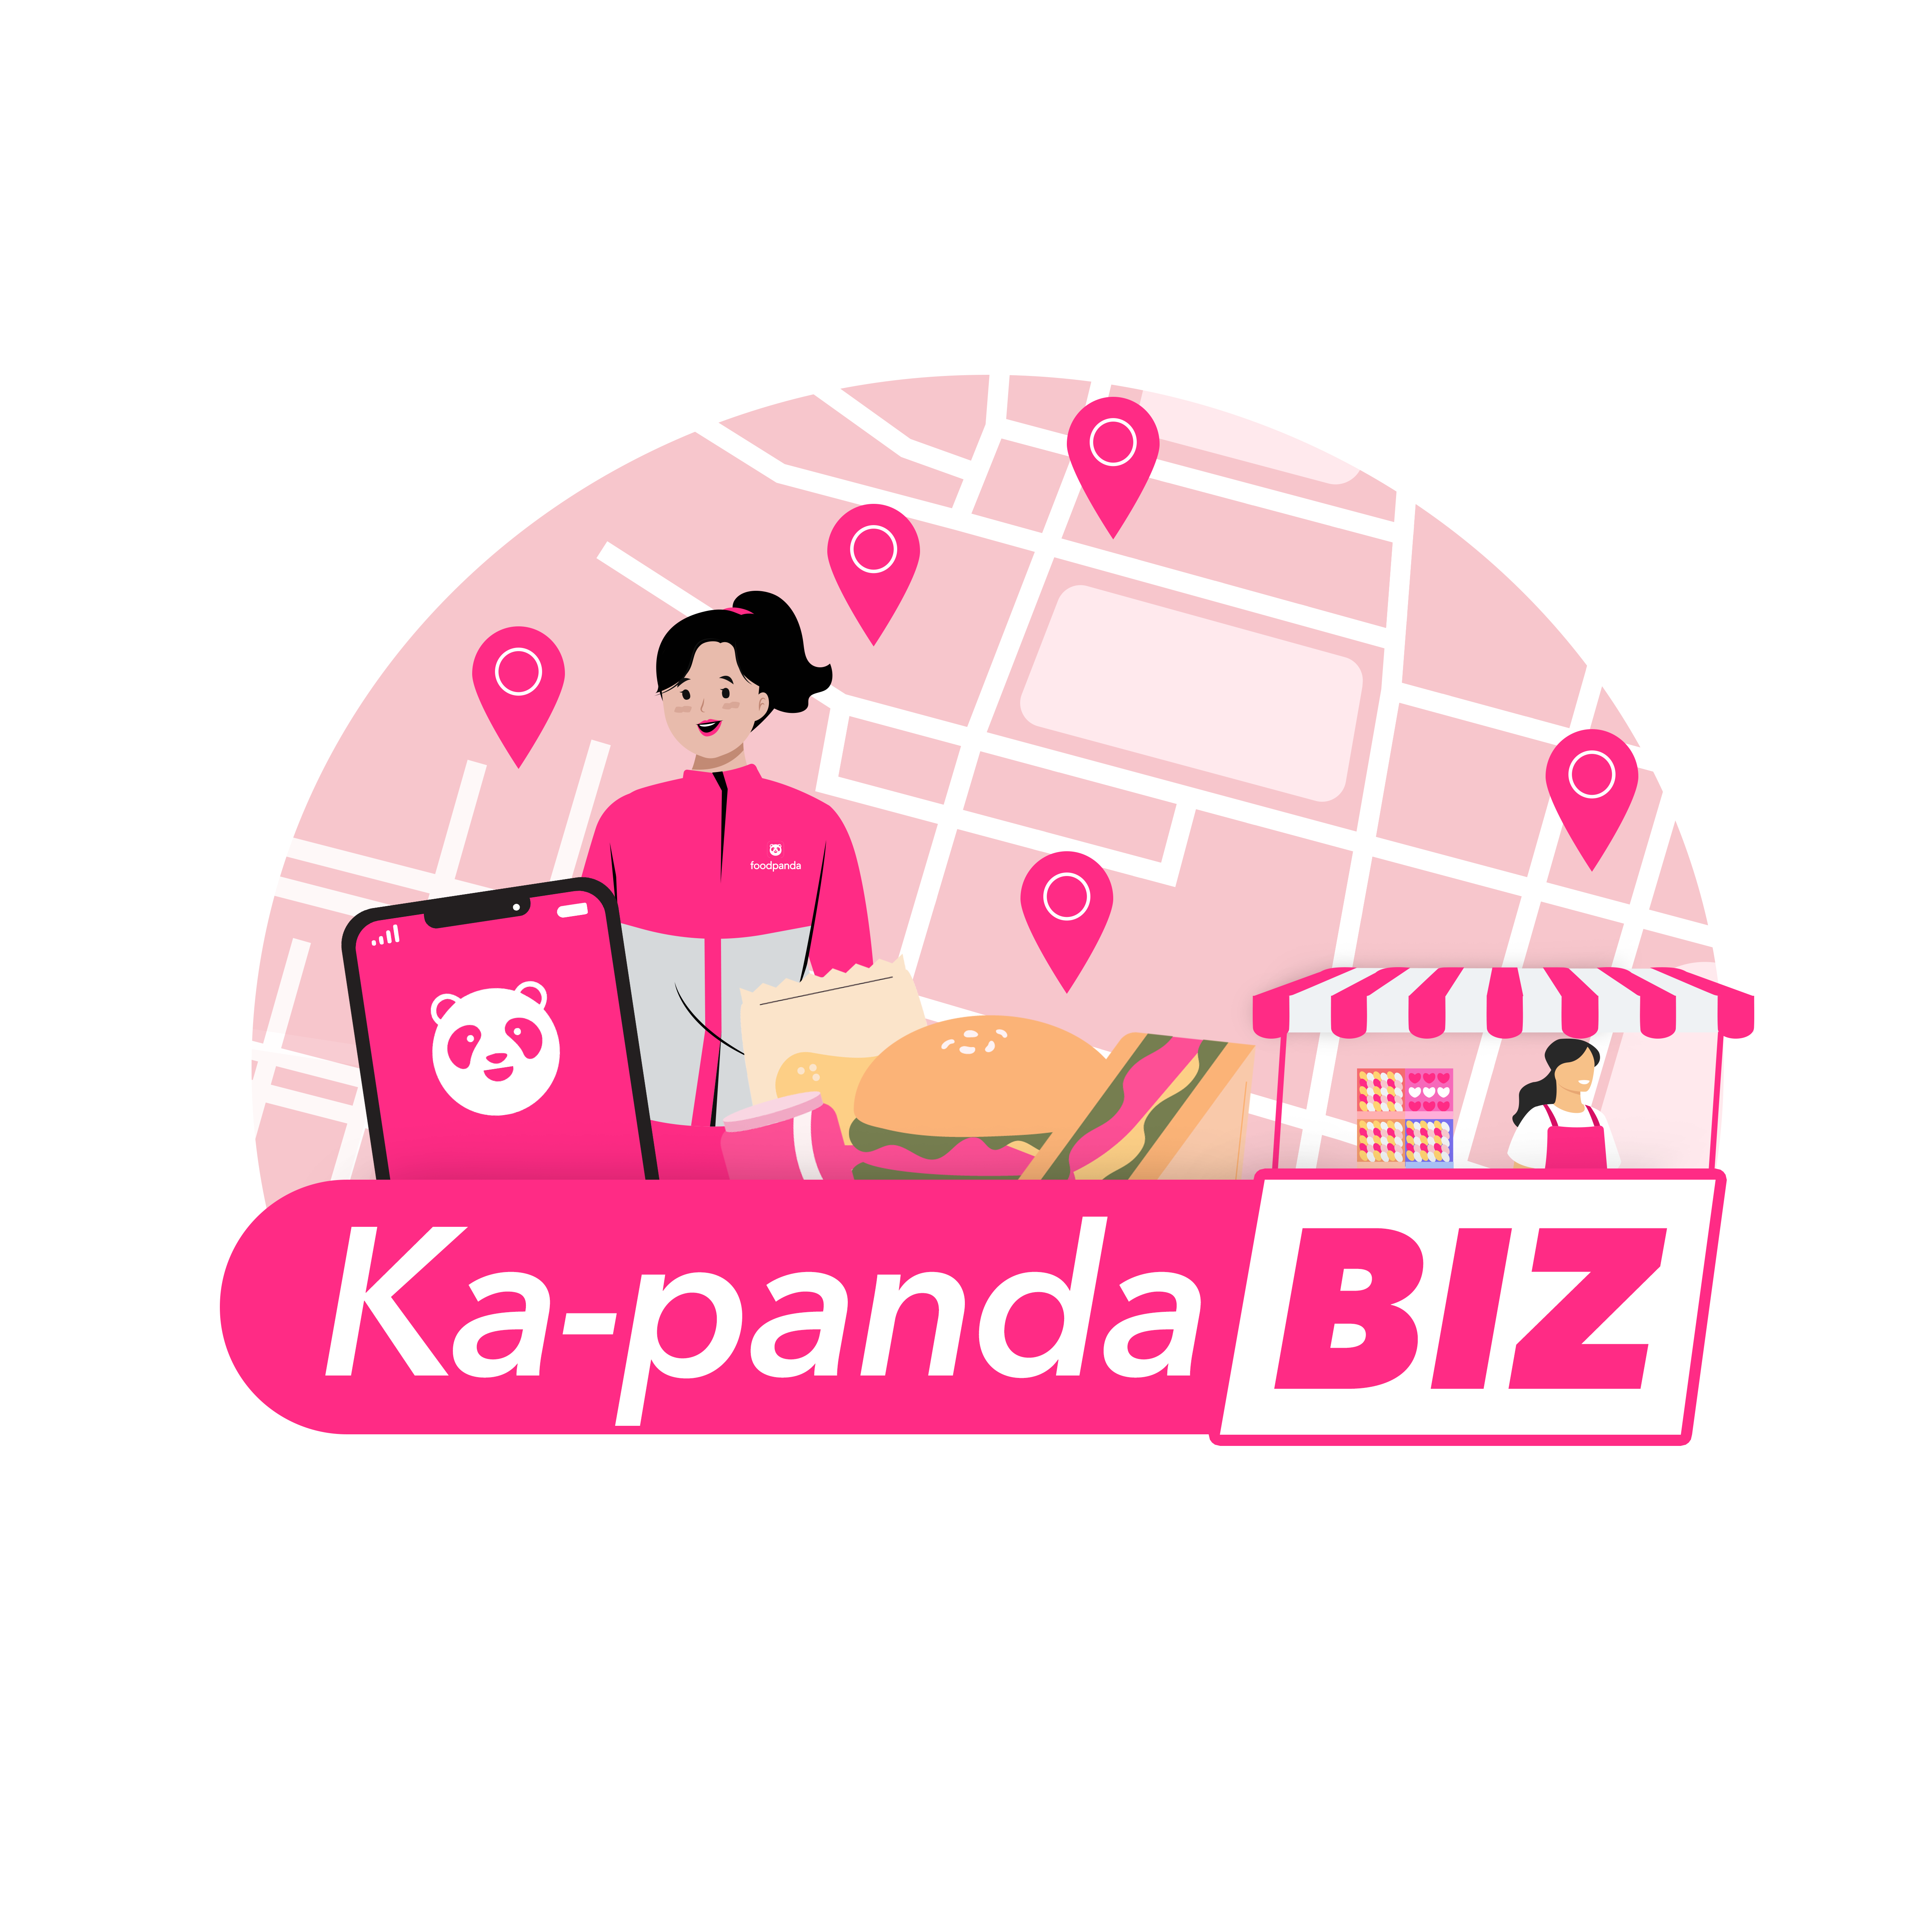 foodpanda logistics marks women’s month withlivelihood program for Ka-panda ladies 